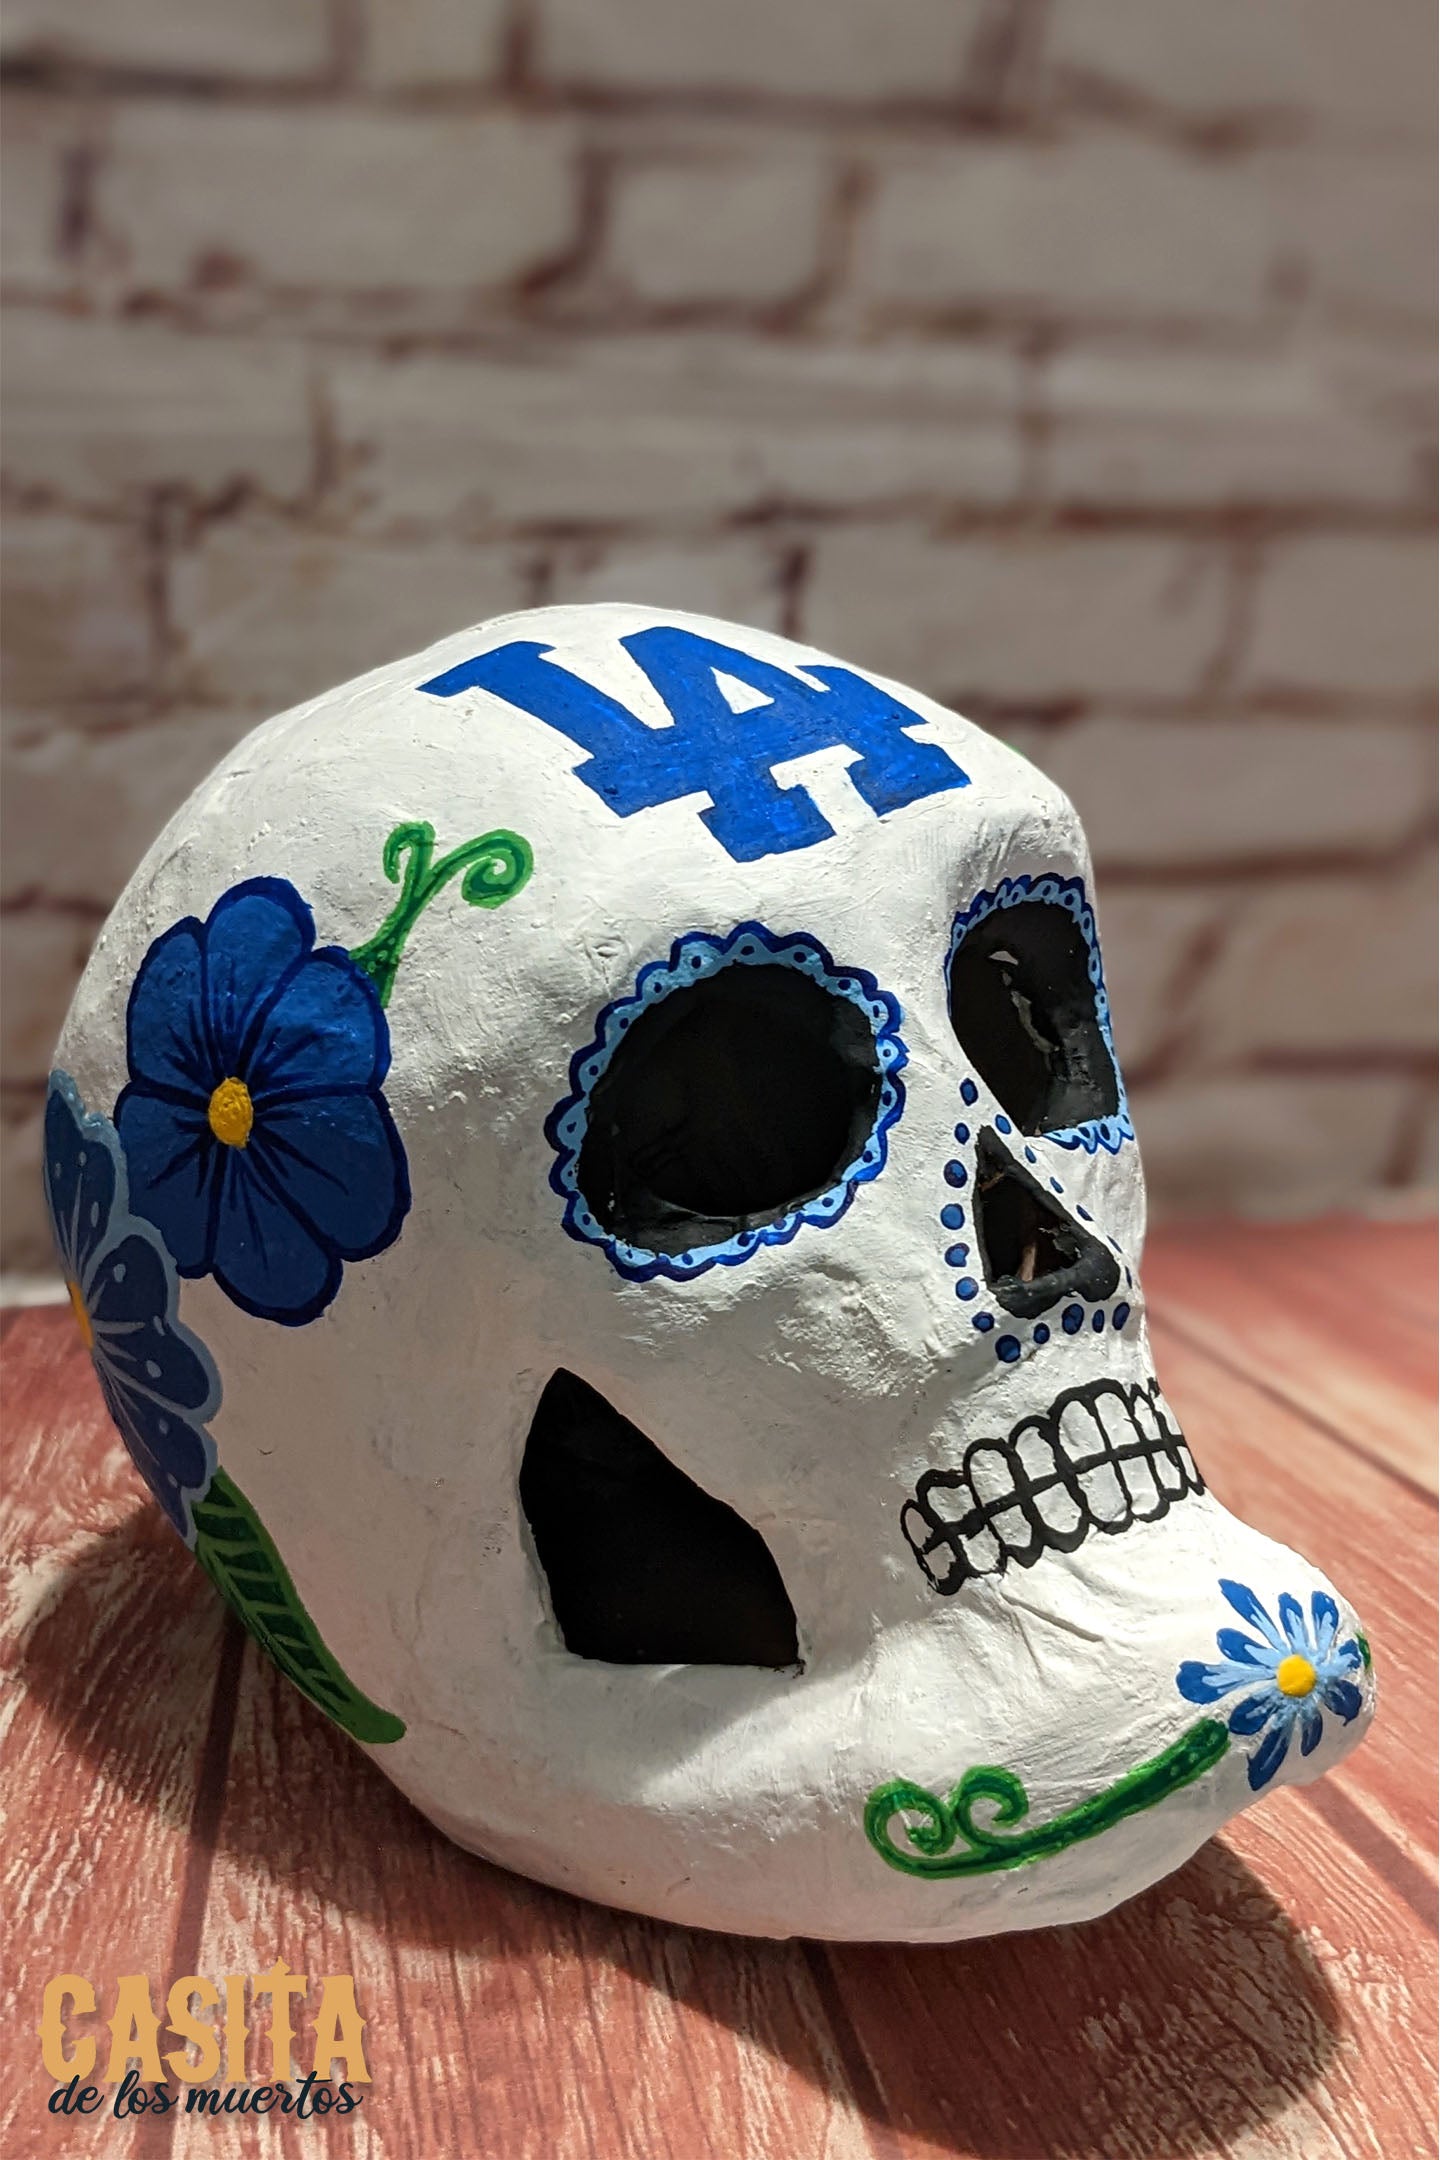 L.A. Sugar Skull